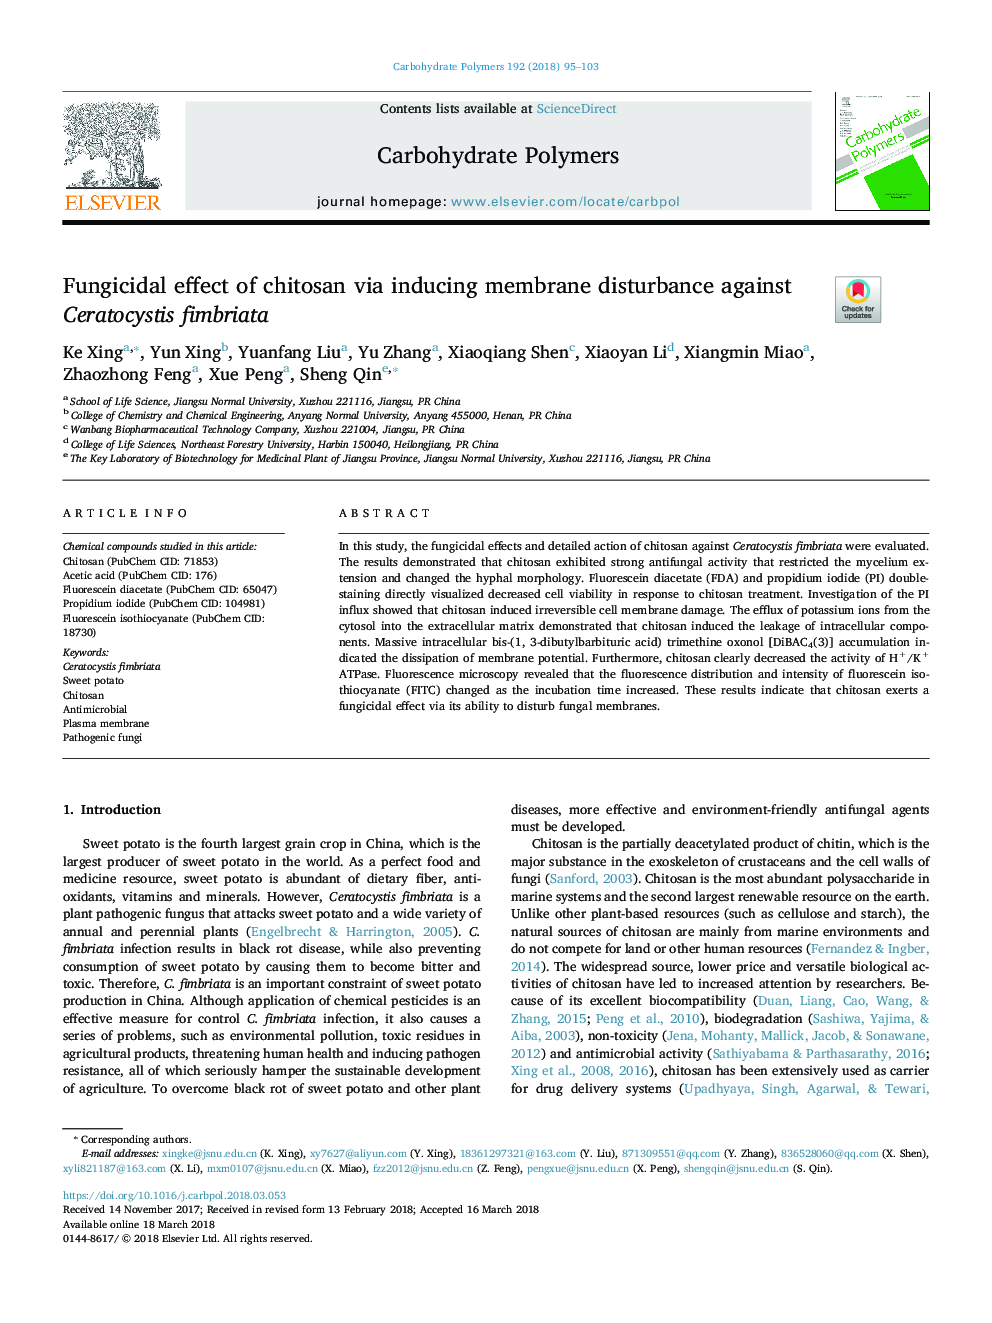 Fungicidal effect of chitosan via inducing membrane disturbance against Ceratocystis fimbriata